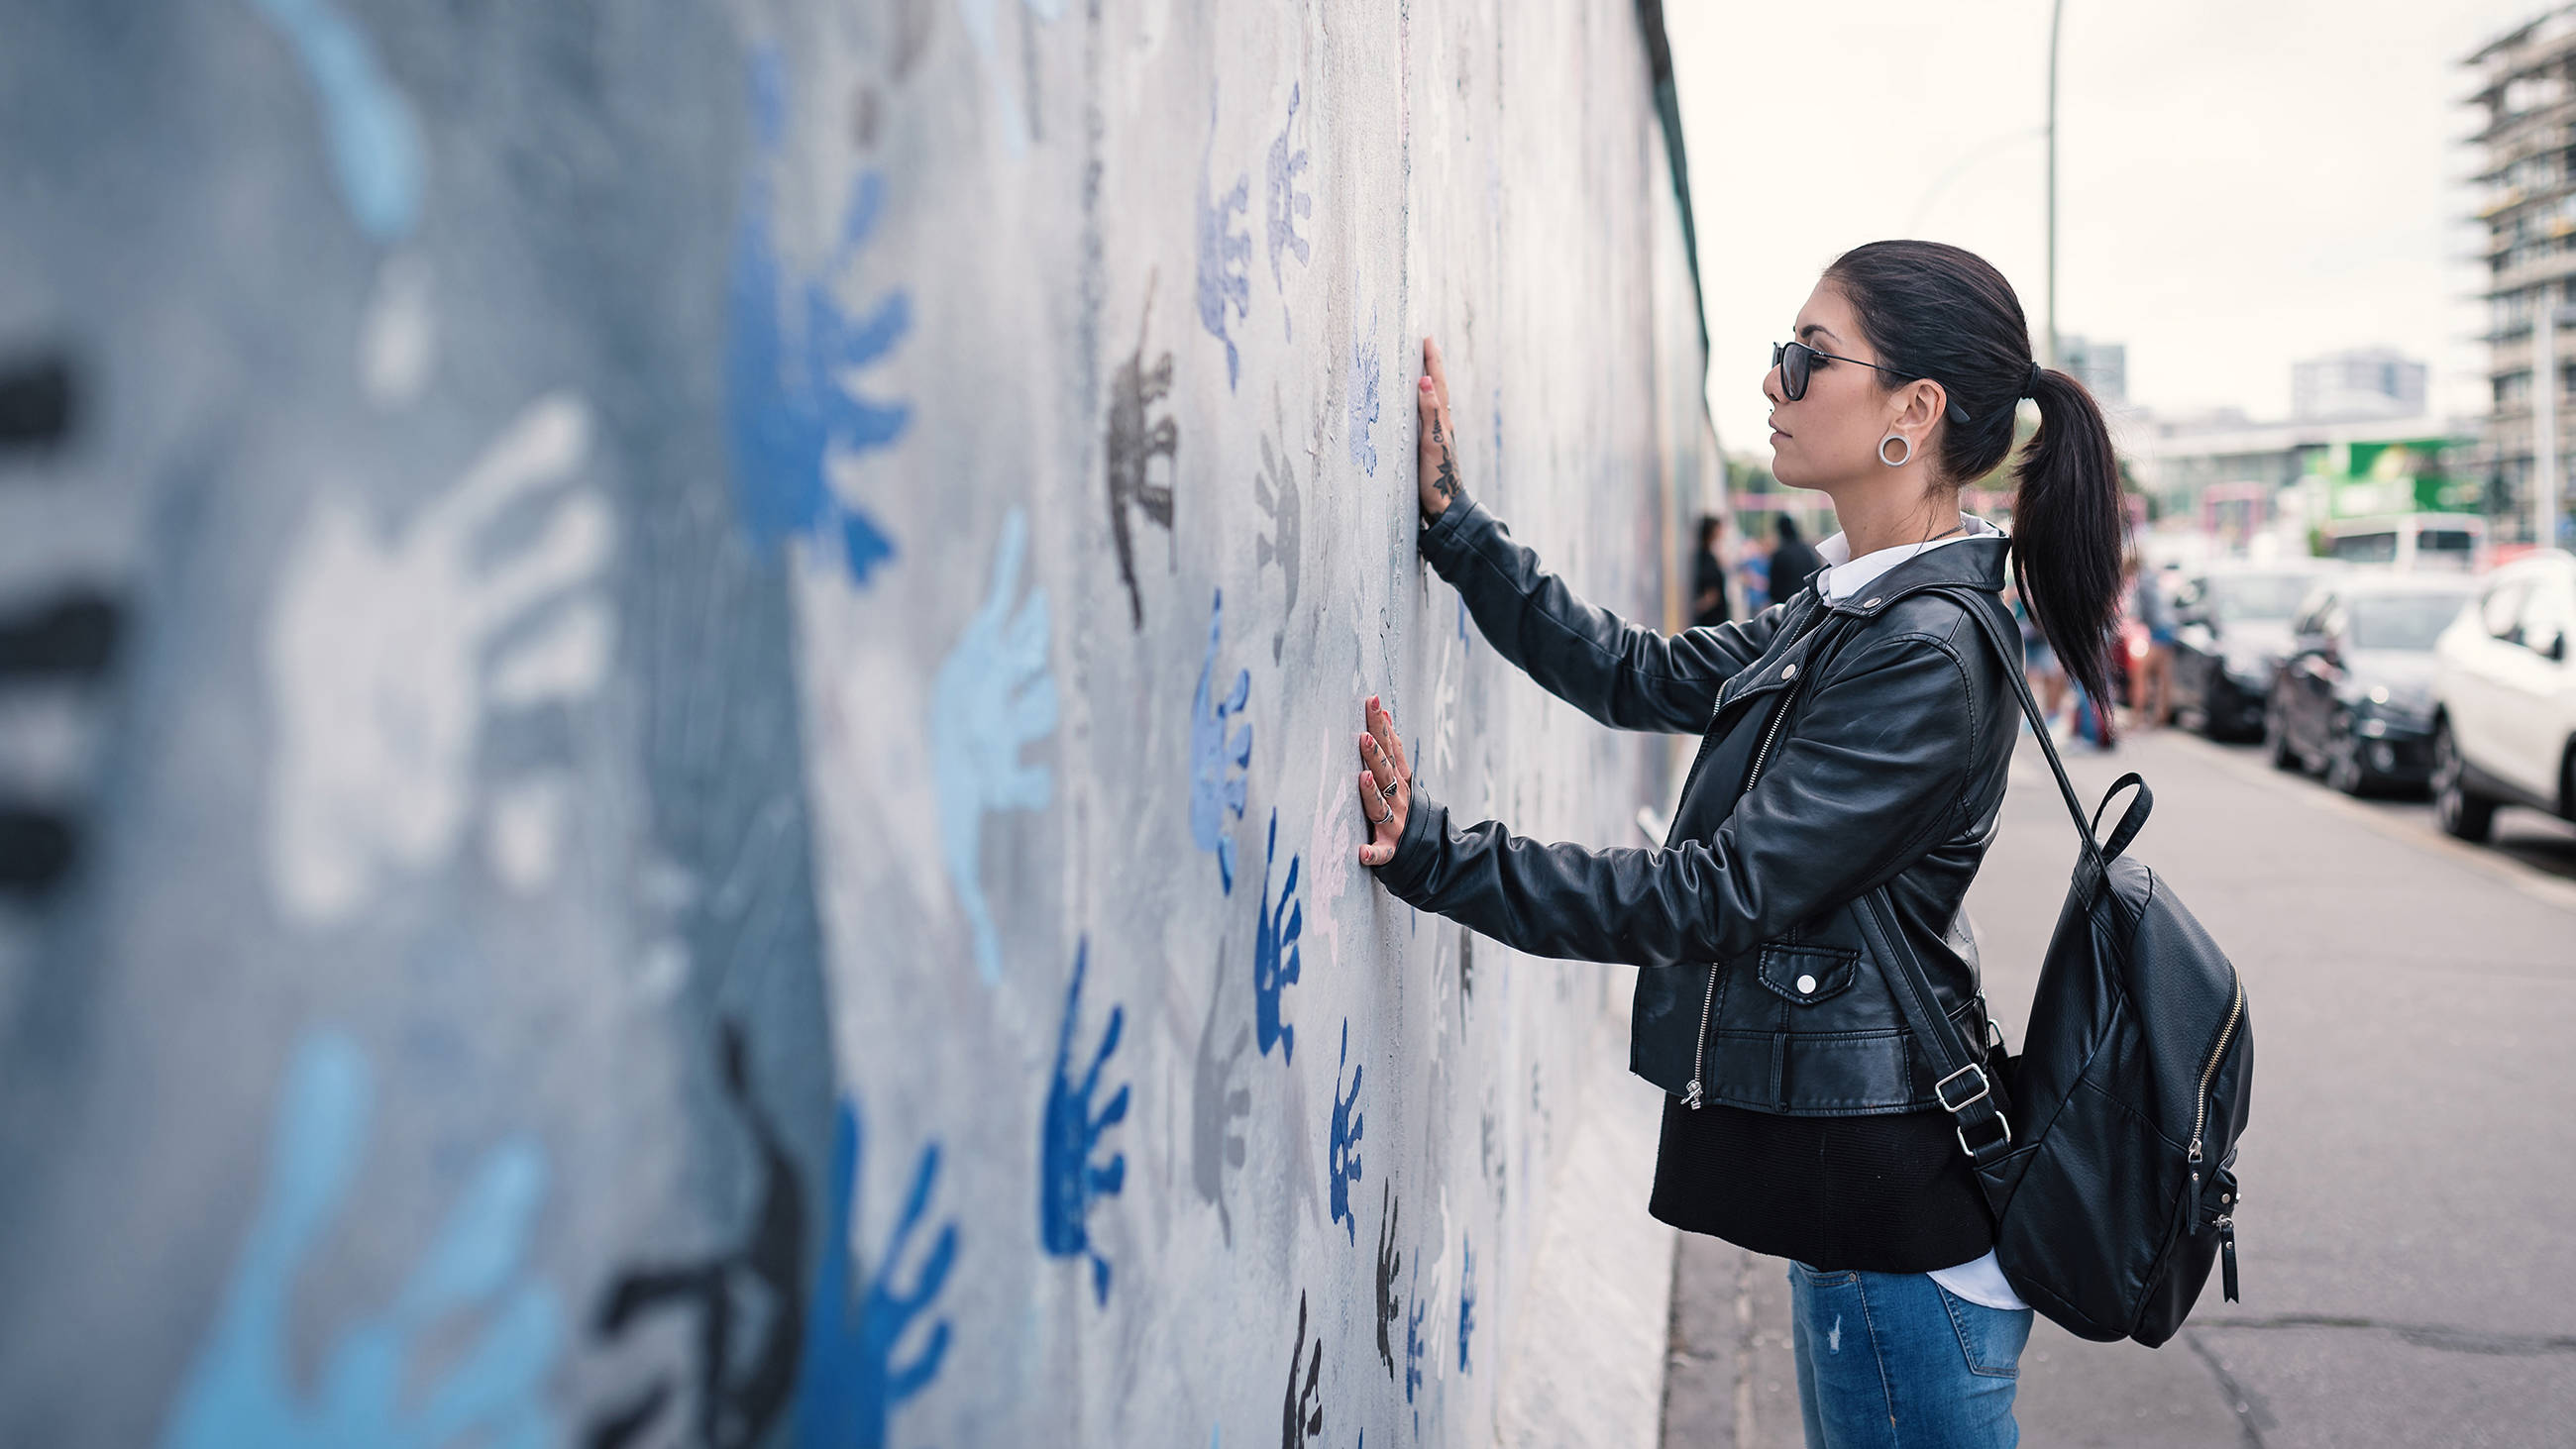 Berlin Mauer - Sehenswürdigkeiten in Berlin